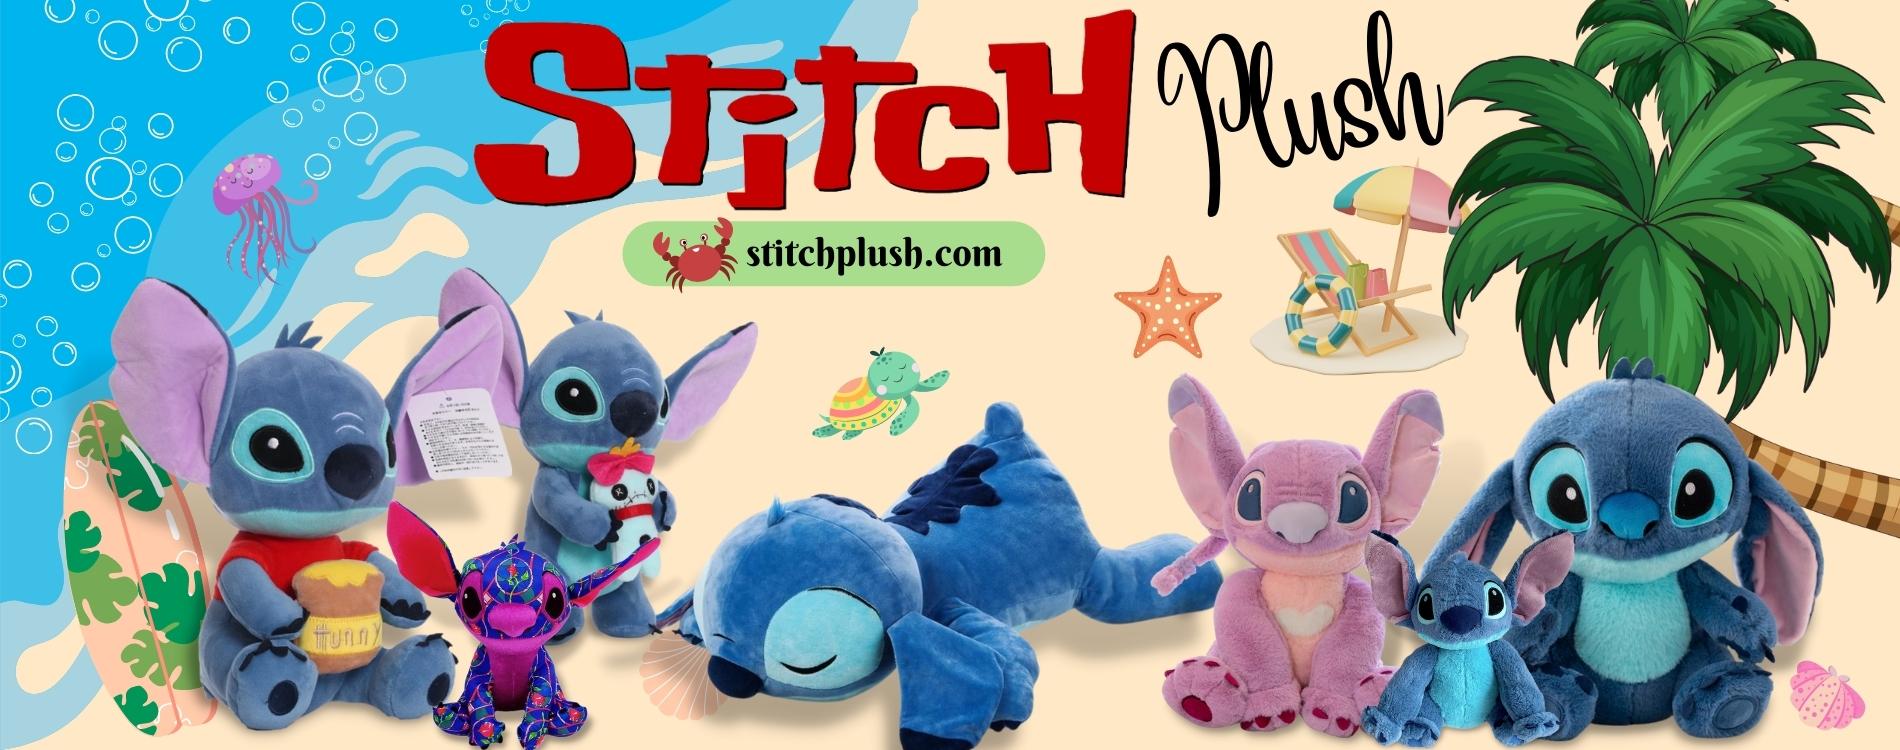 stitch plush banner 2